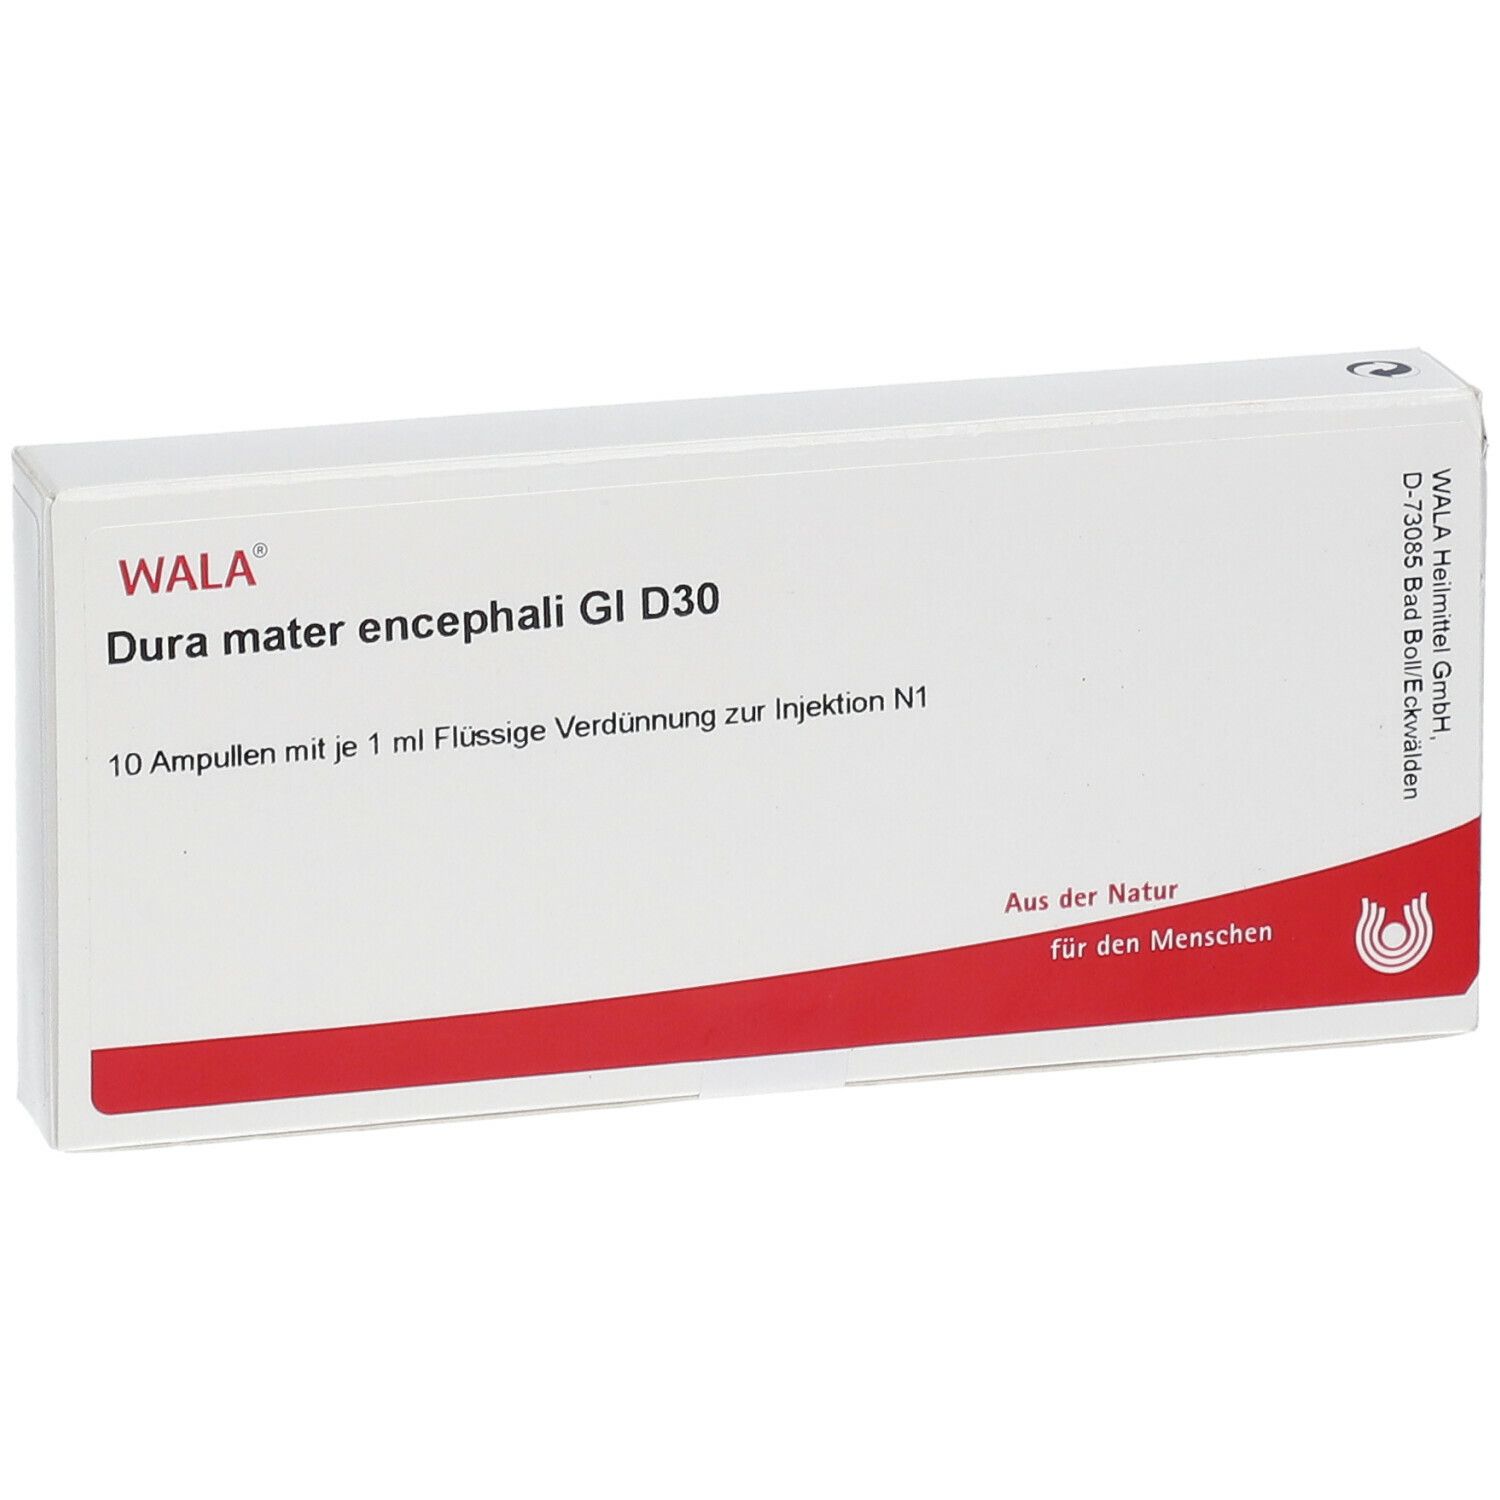 WALA® Dura mater encephali Gl D 30